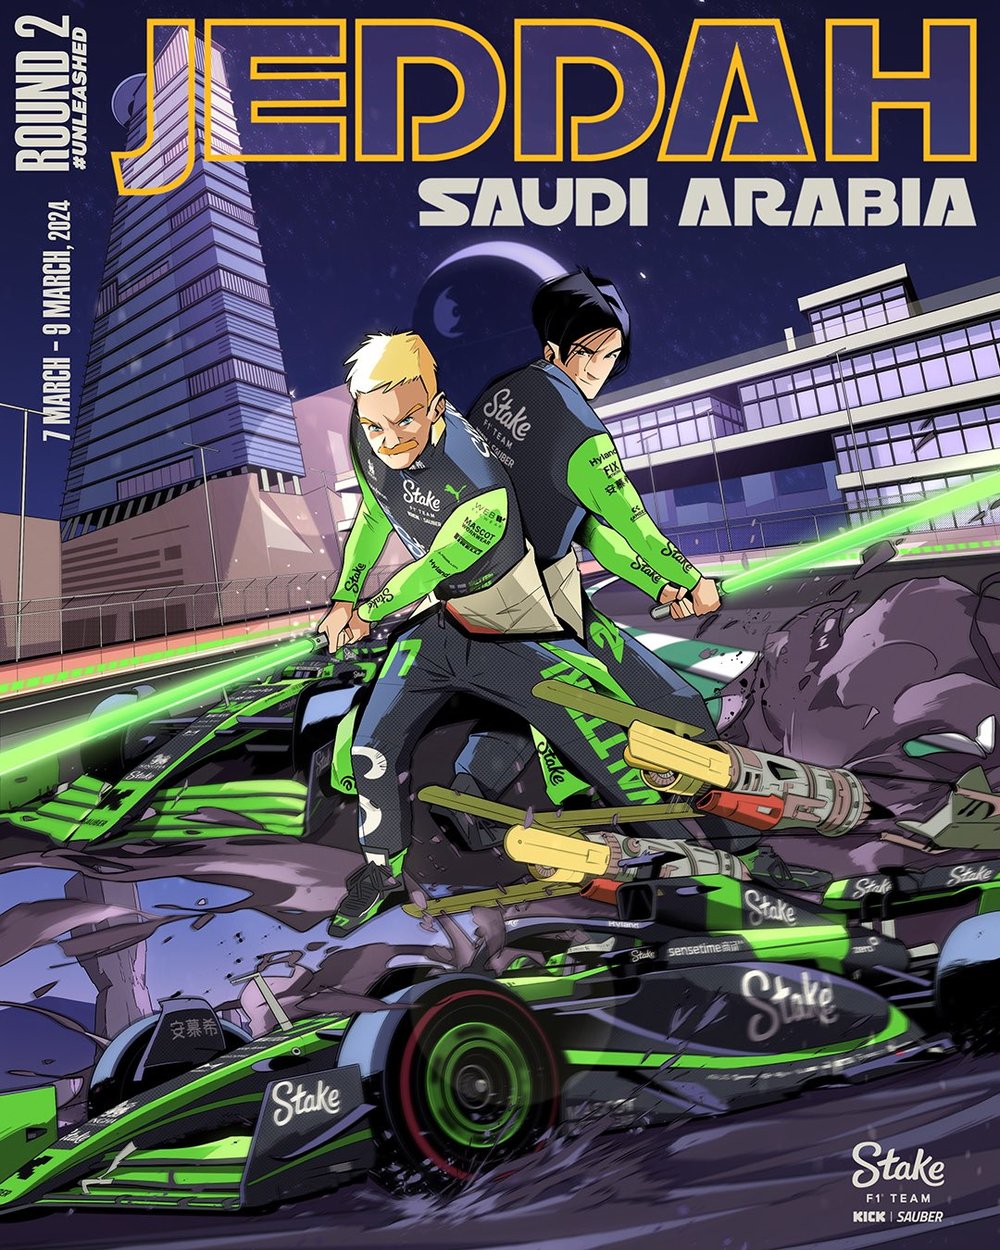 1 Stake F1 Kick Sauber Saudi Arabian GP 1.jpg